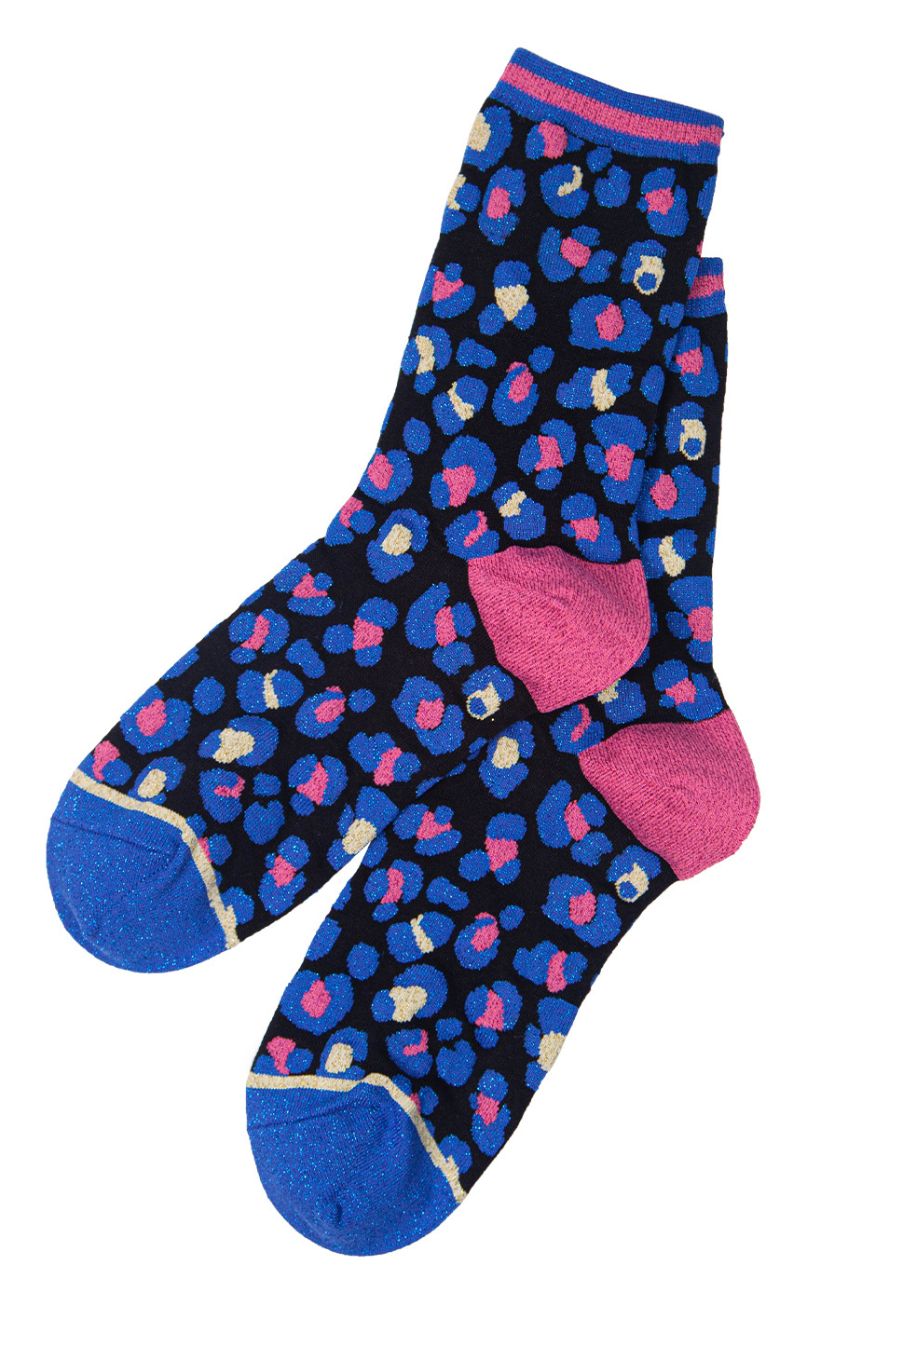 blue and pink animal print ankle socks